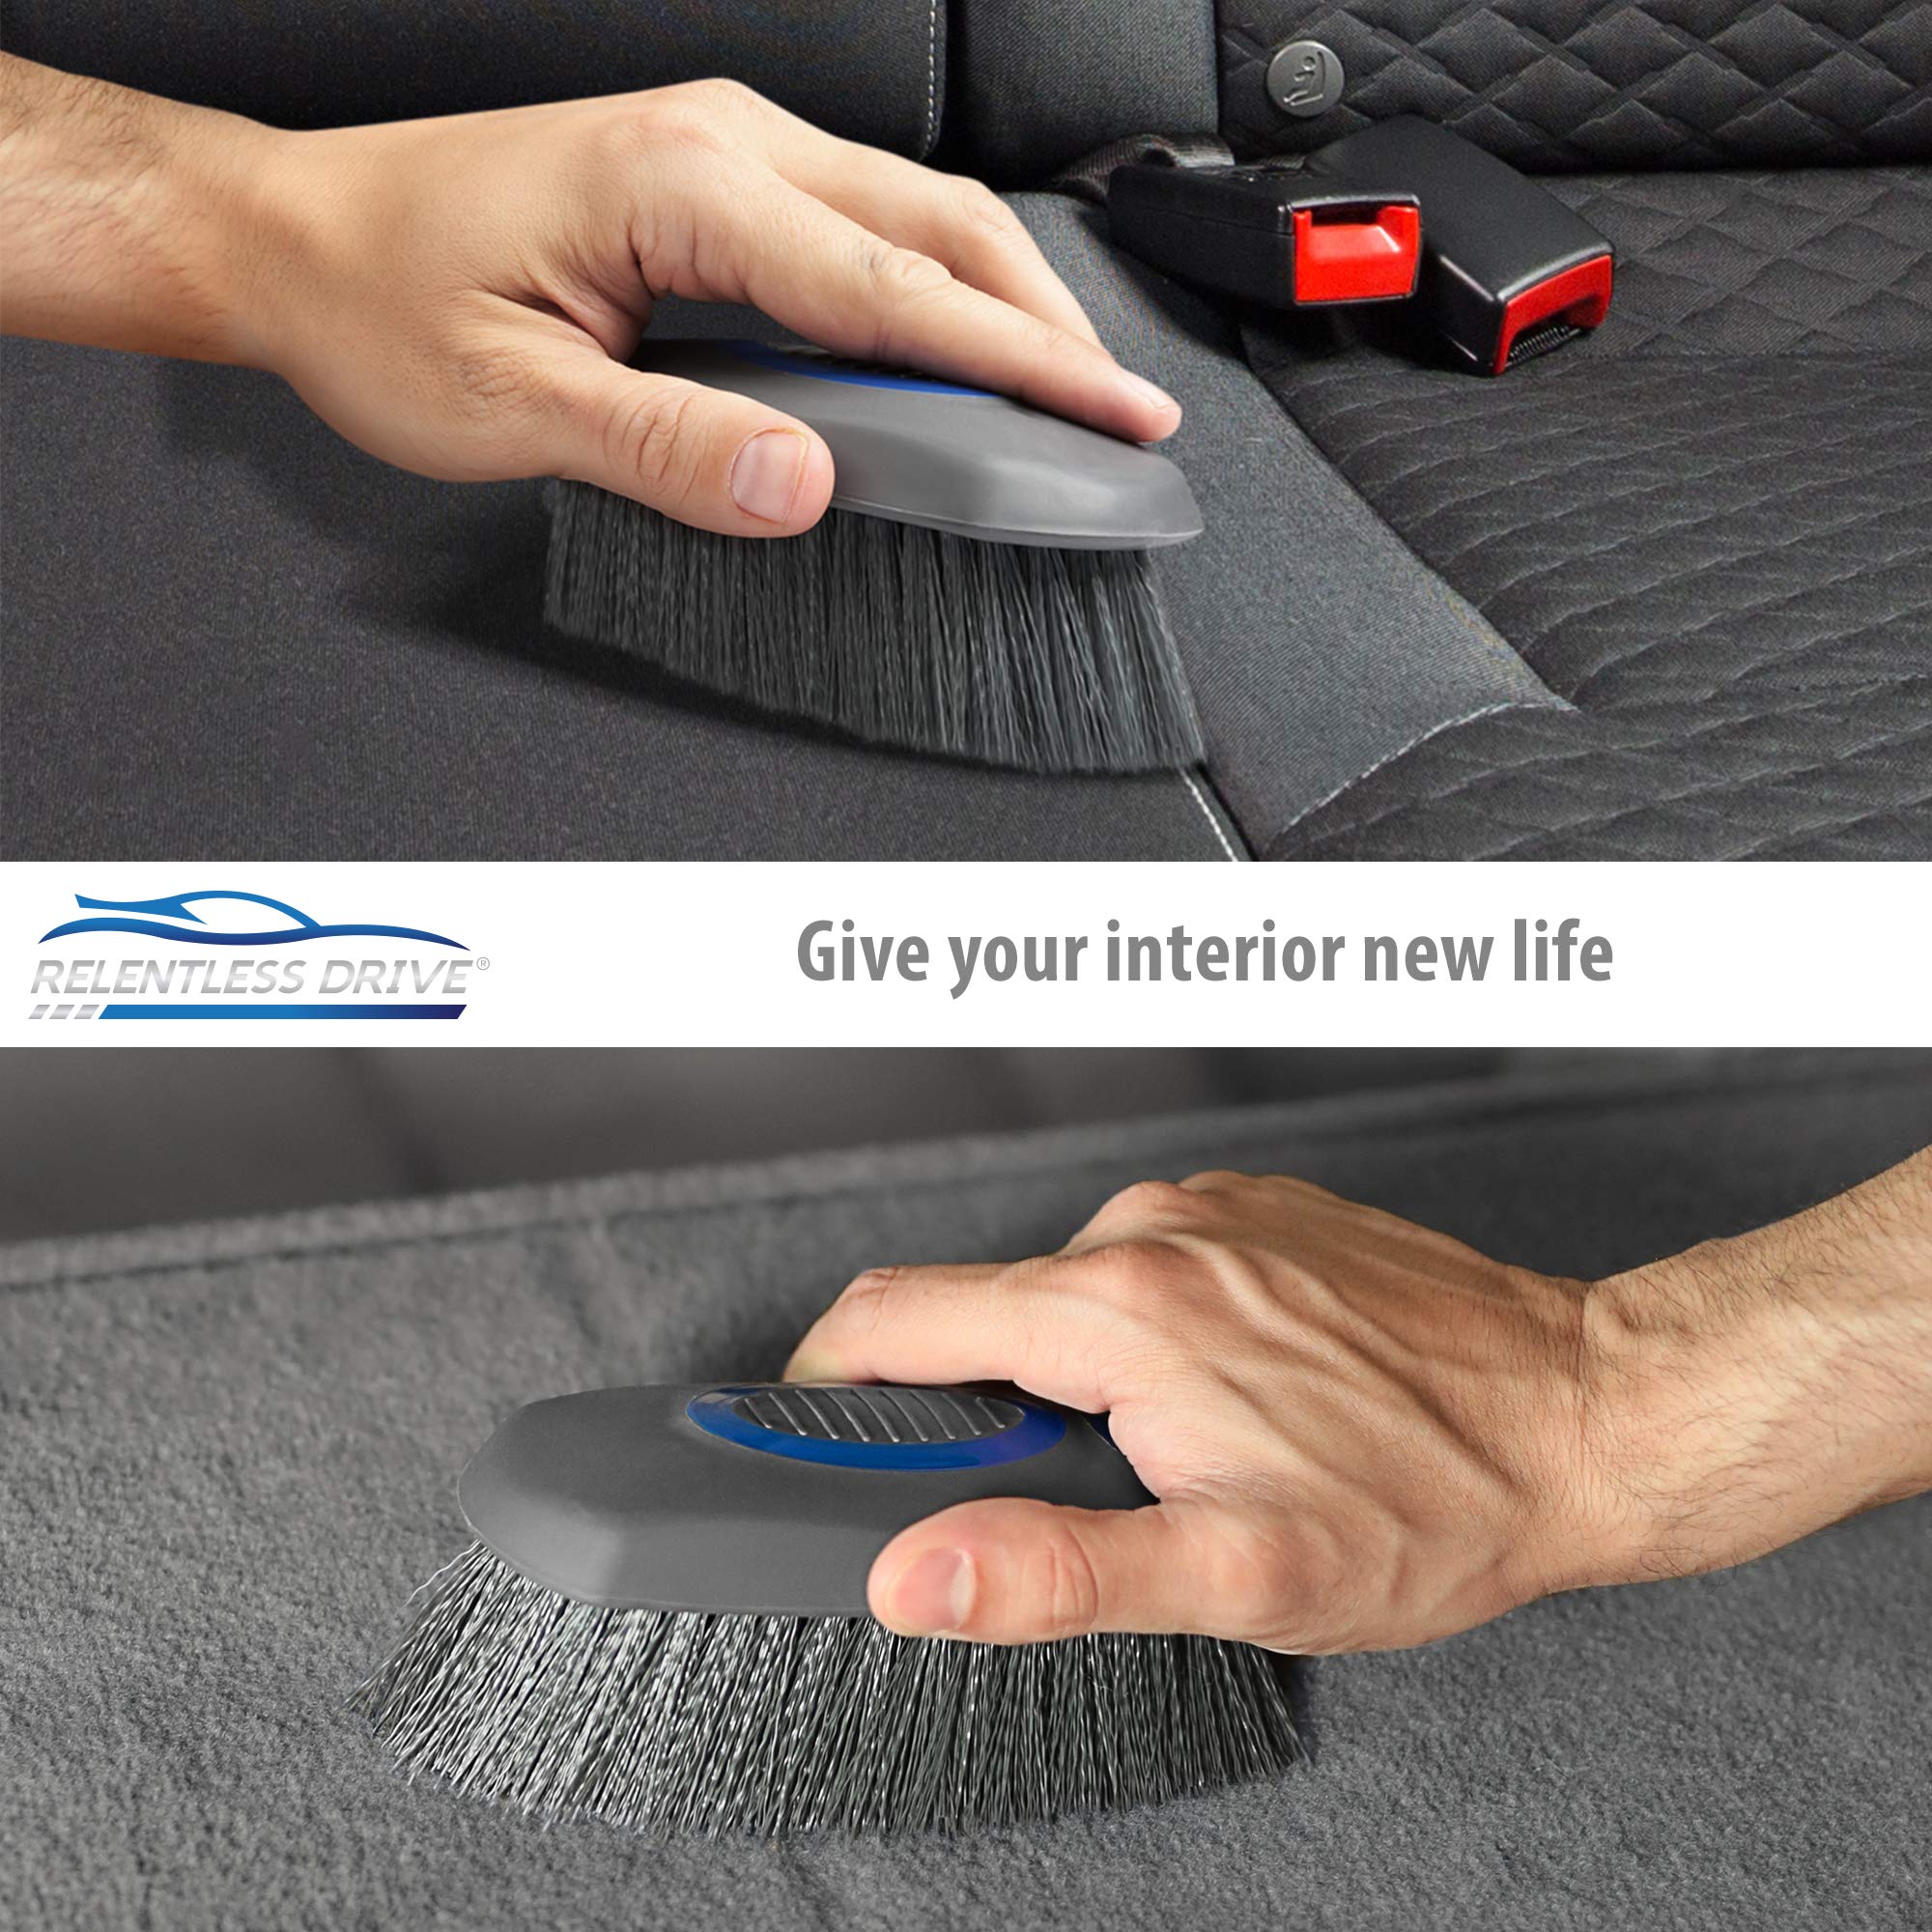 Relentless Drive Car Upholstery Cleaner Kit - Car Seat Cleaner & Car Carpet Cleaner - Works Great on Stains Keep Car Interior Smelling Fresh - Car